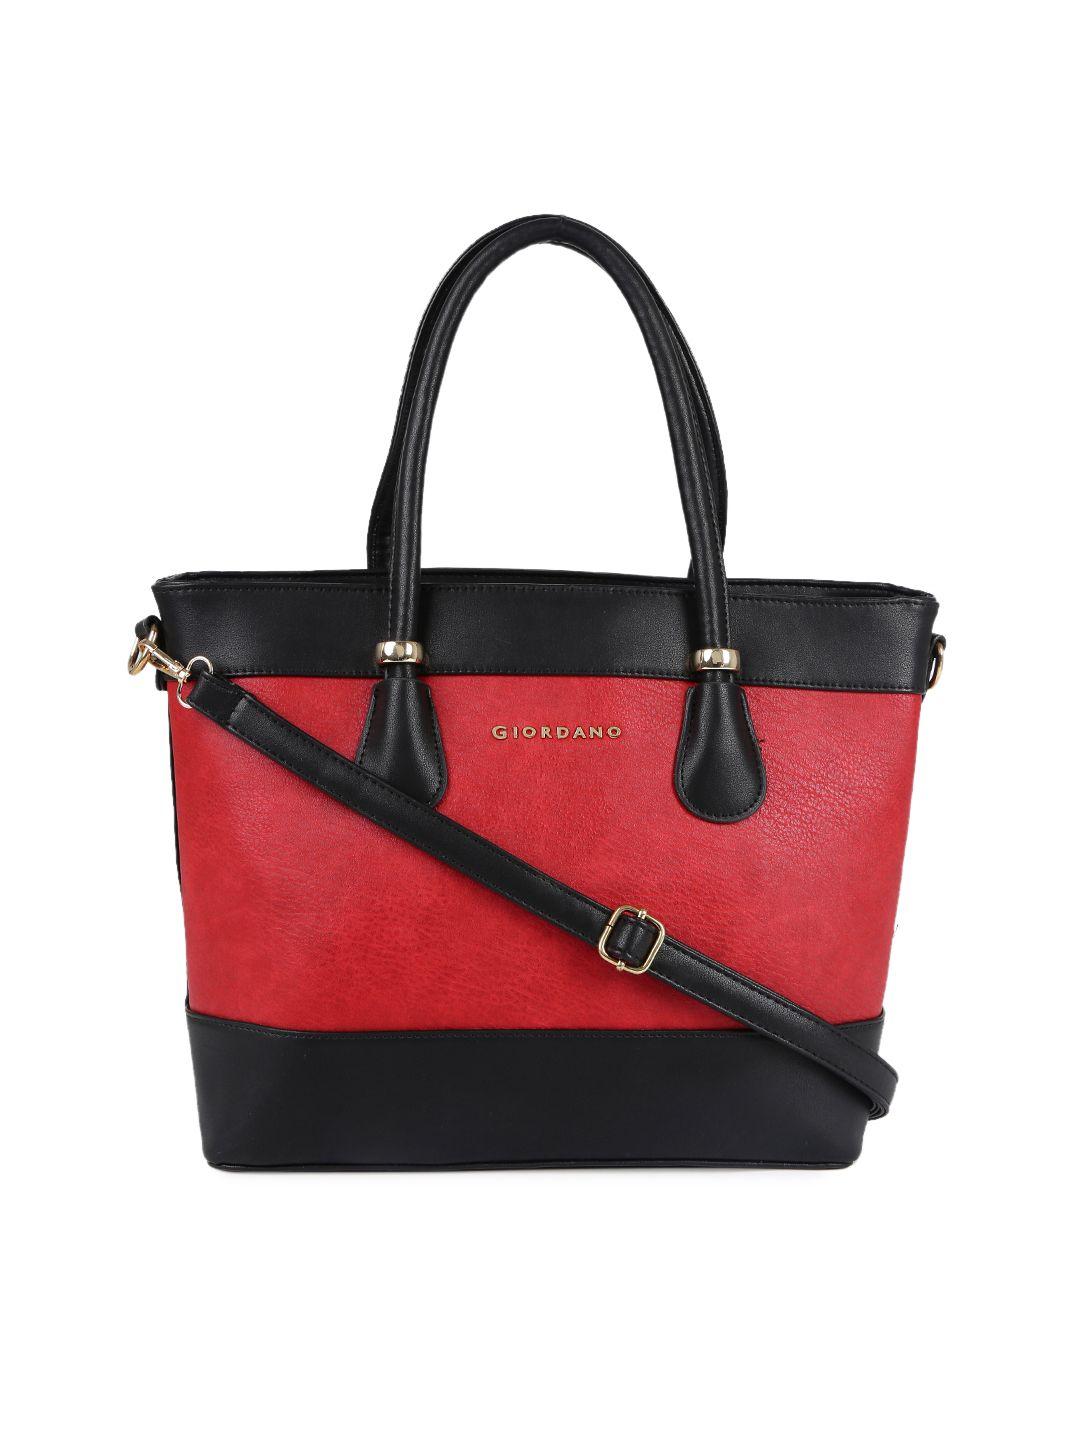 giordano black & red colourblocked shoulder bag